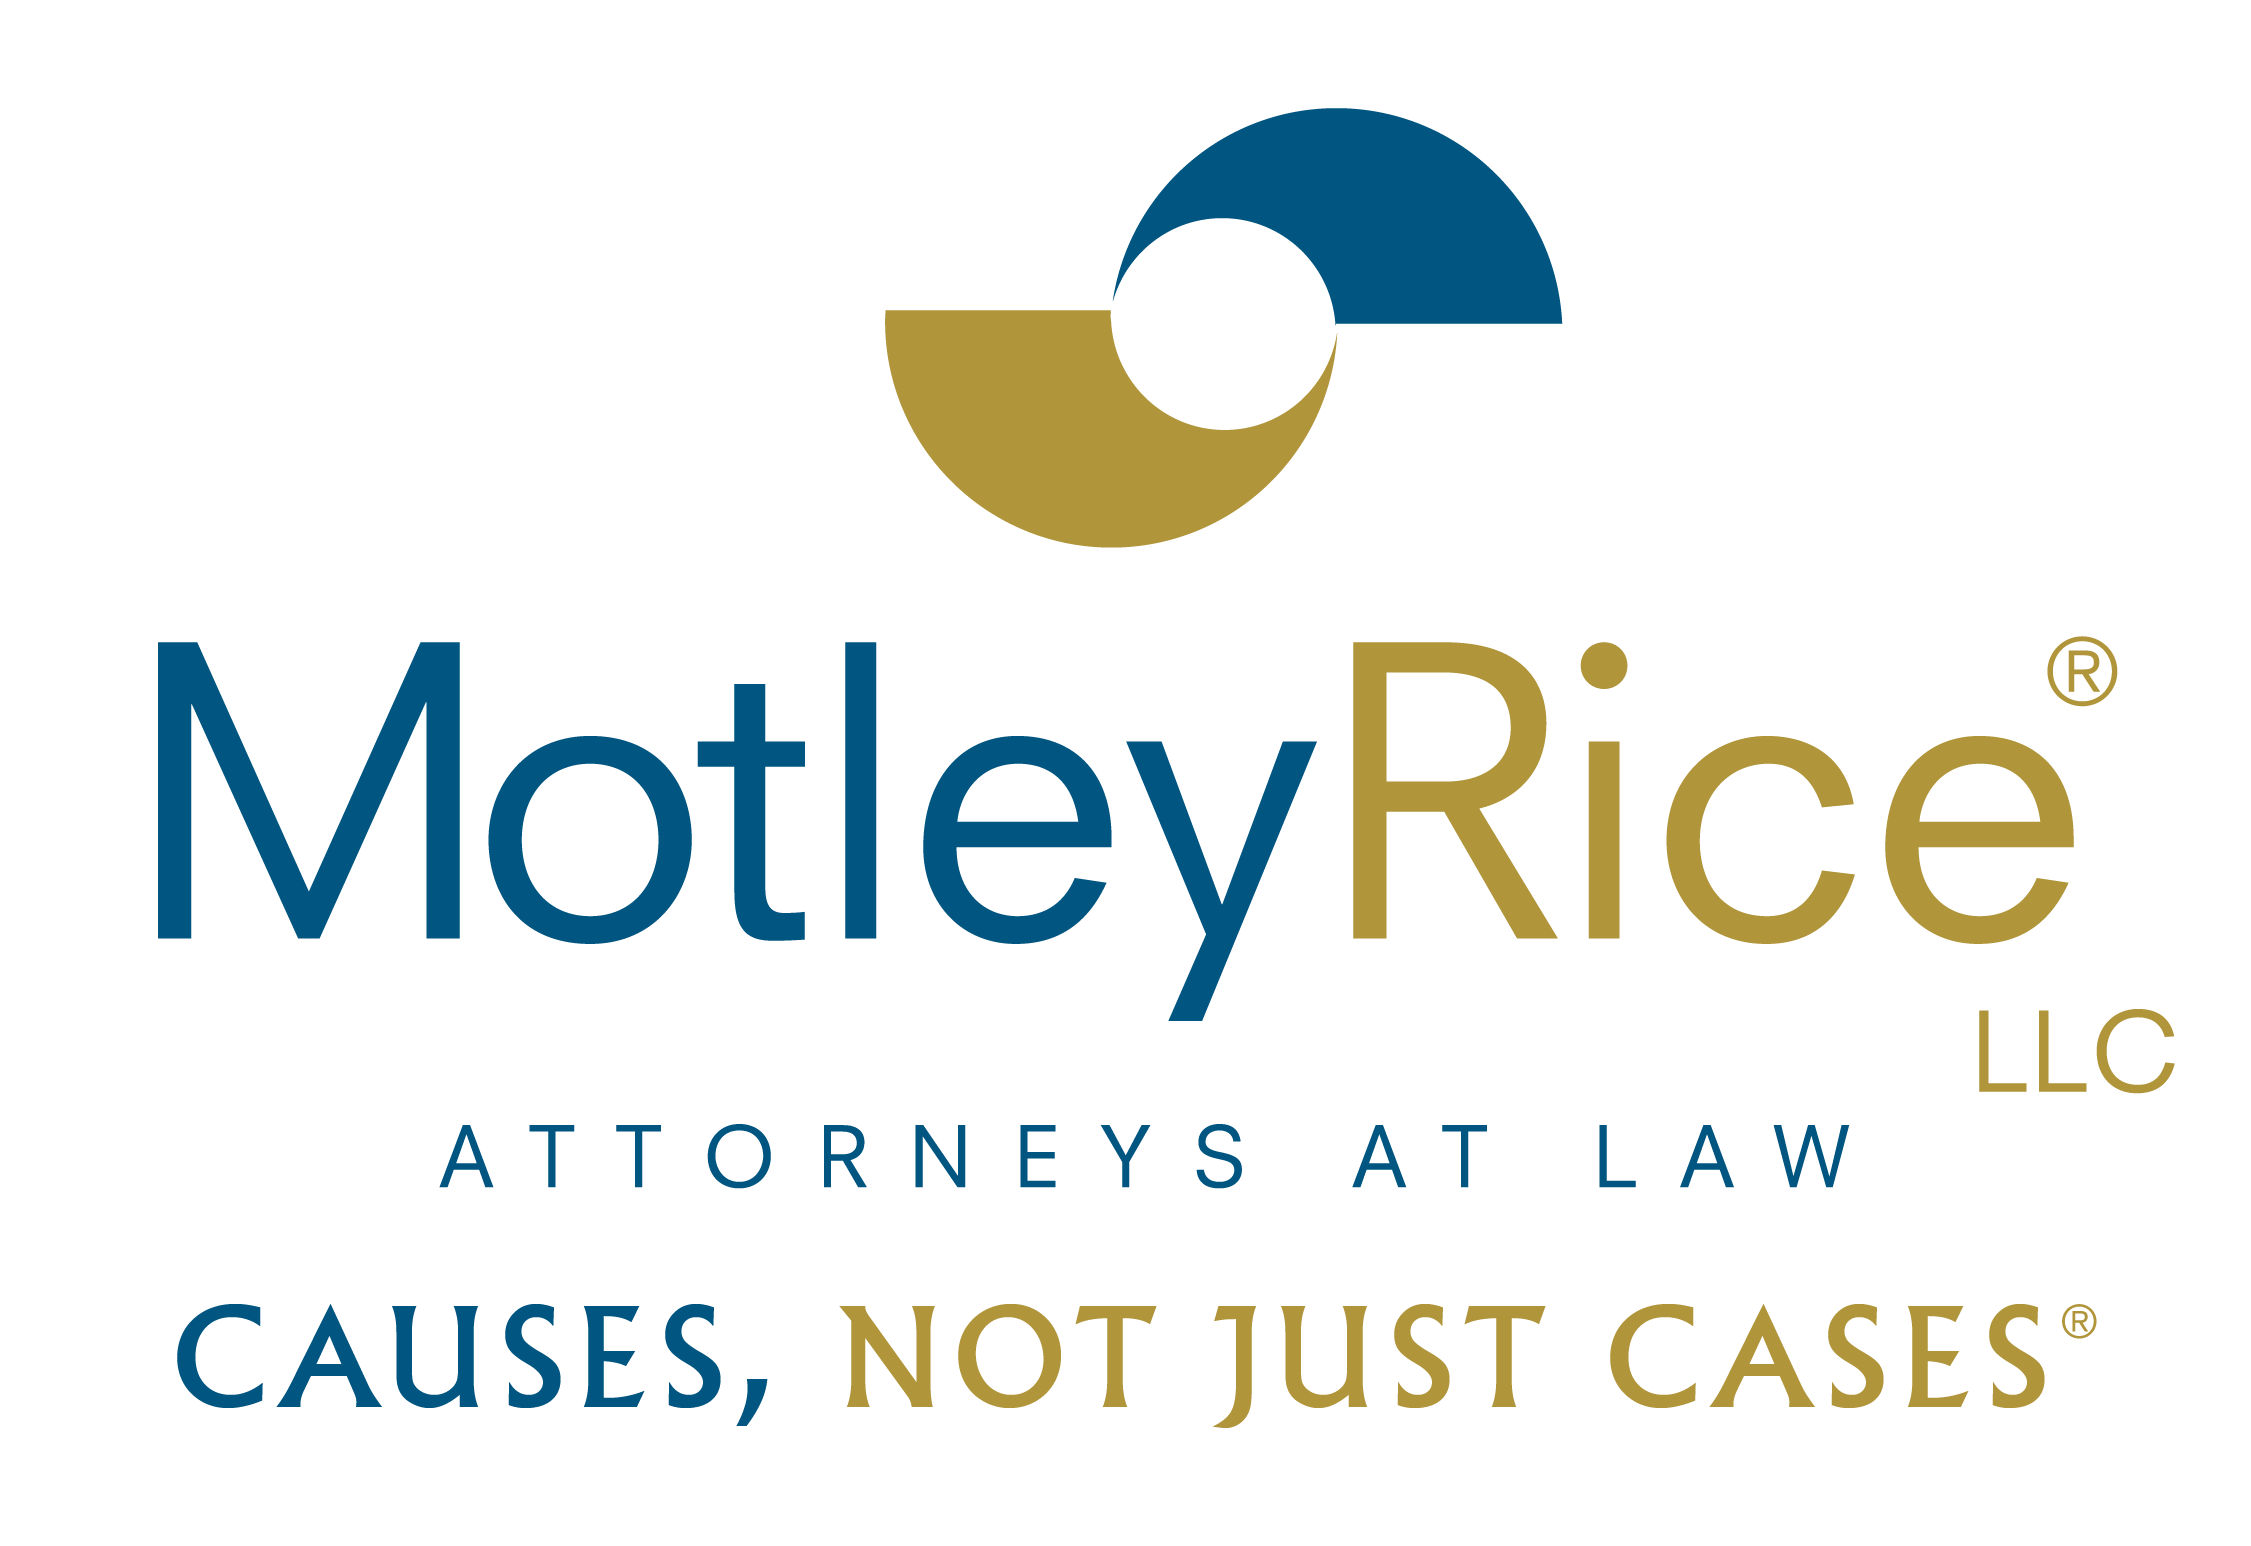 MotleyRice Attorneys at Law